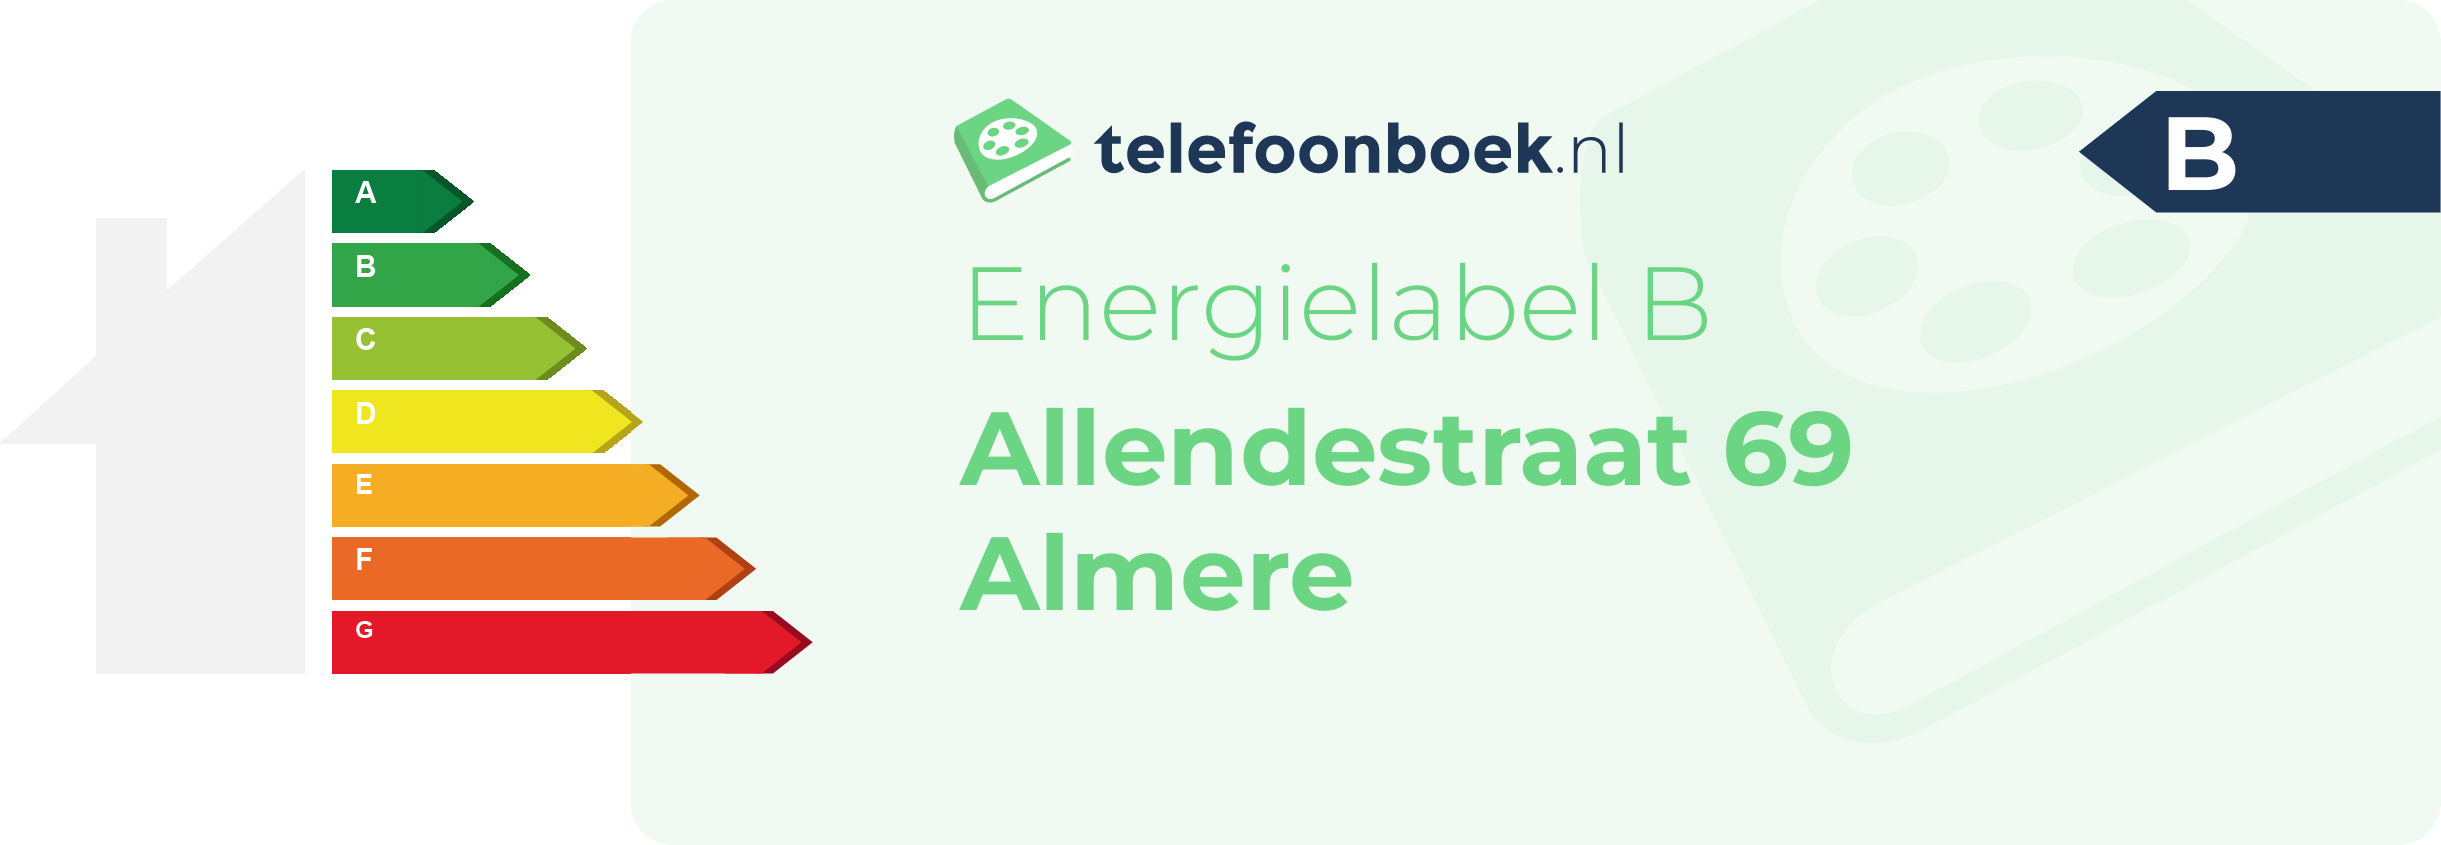 Energielabel Allendestraat 69 Almere